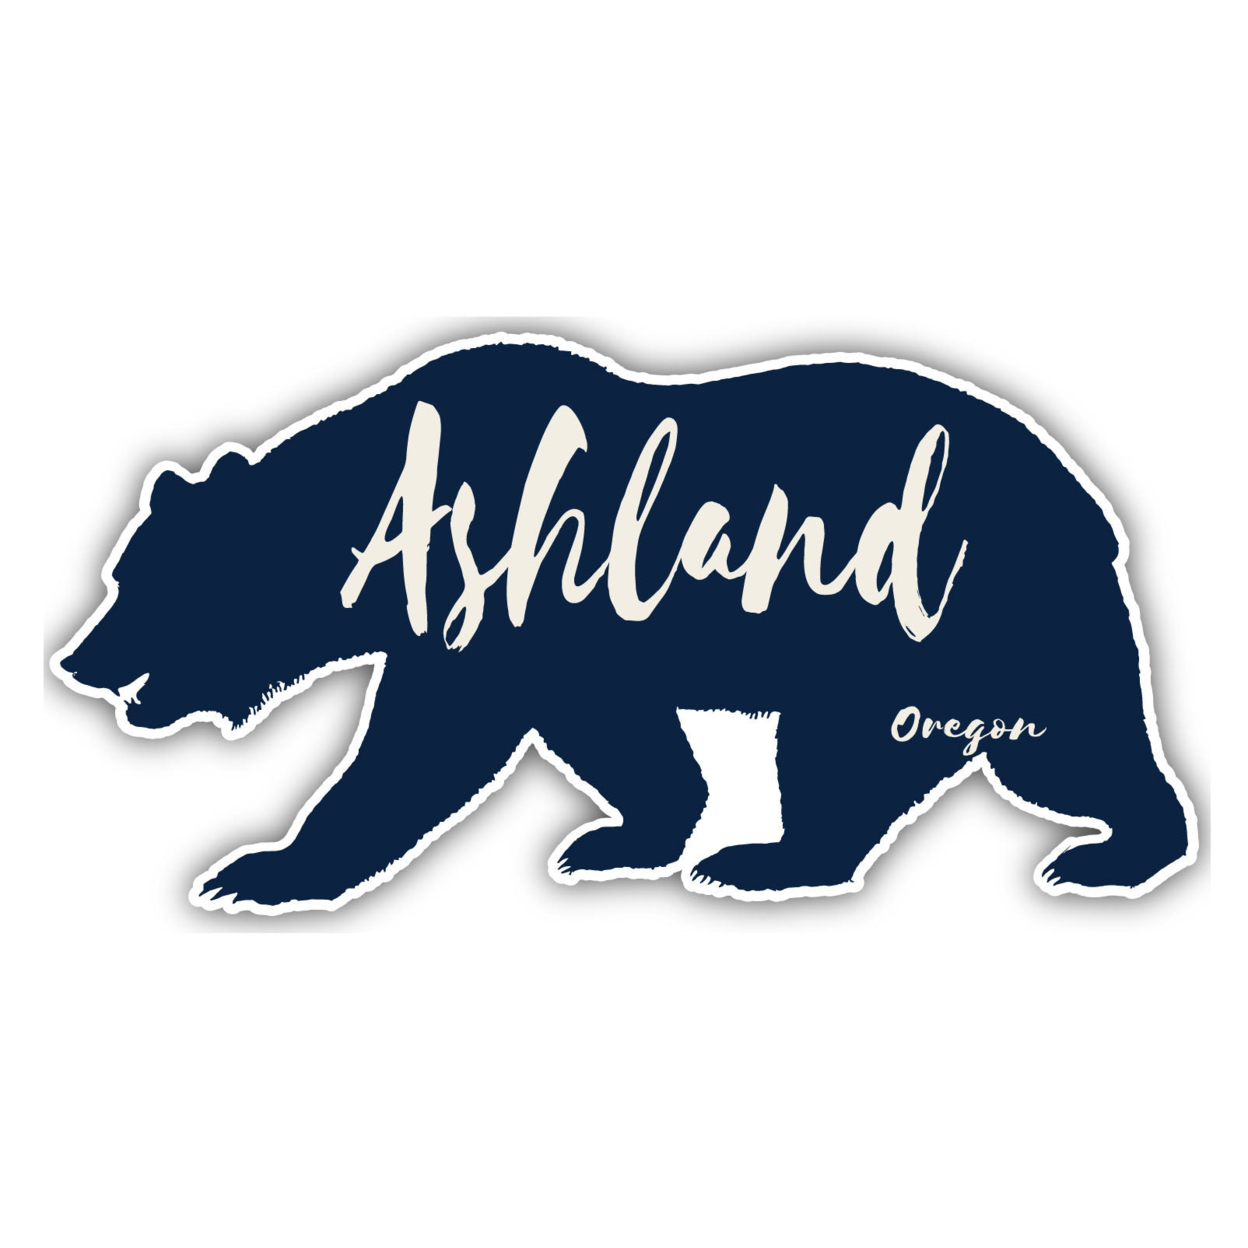 Ashland Oregon Souvenir Decorative Stickers (Choose Theme And Size) - Single Unit, 4-Inch, Camp Life